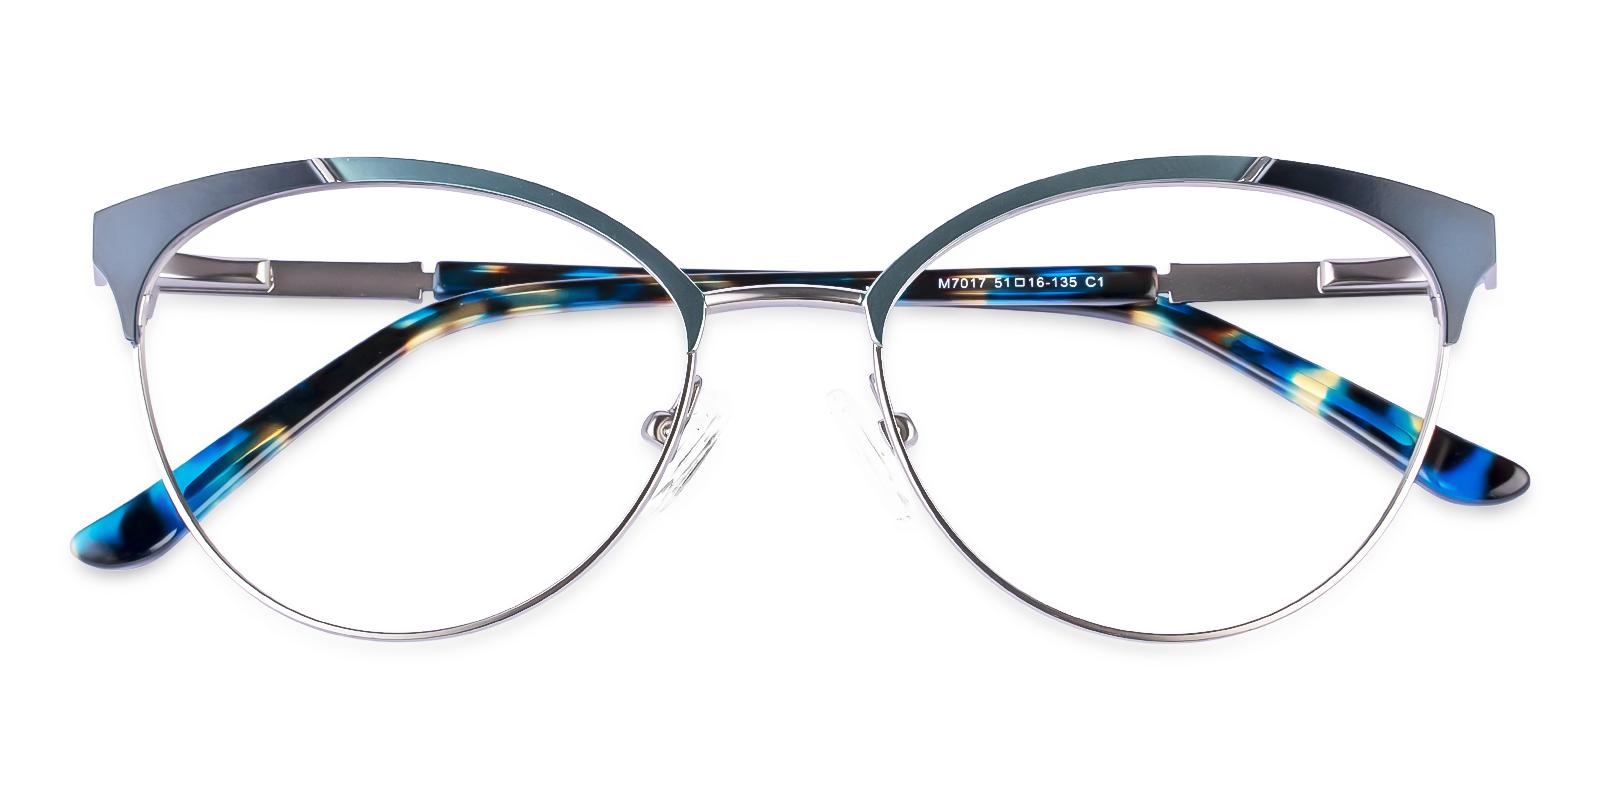 Huxley Blue Metal Eyeglasses , Fashion , SpringHinges , NosePads Frames from ABBE Glasses